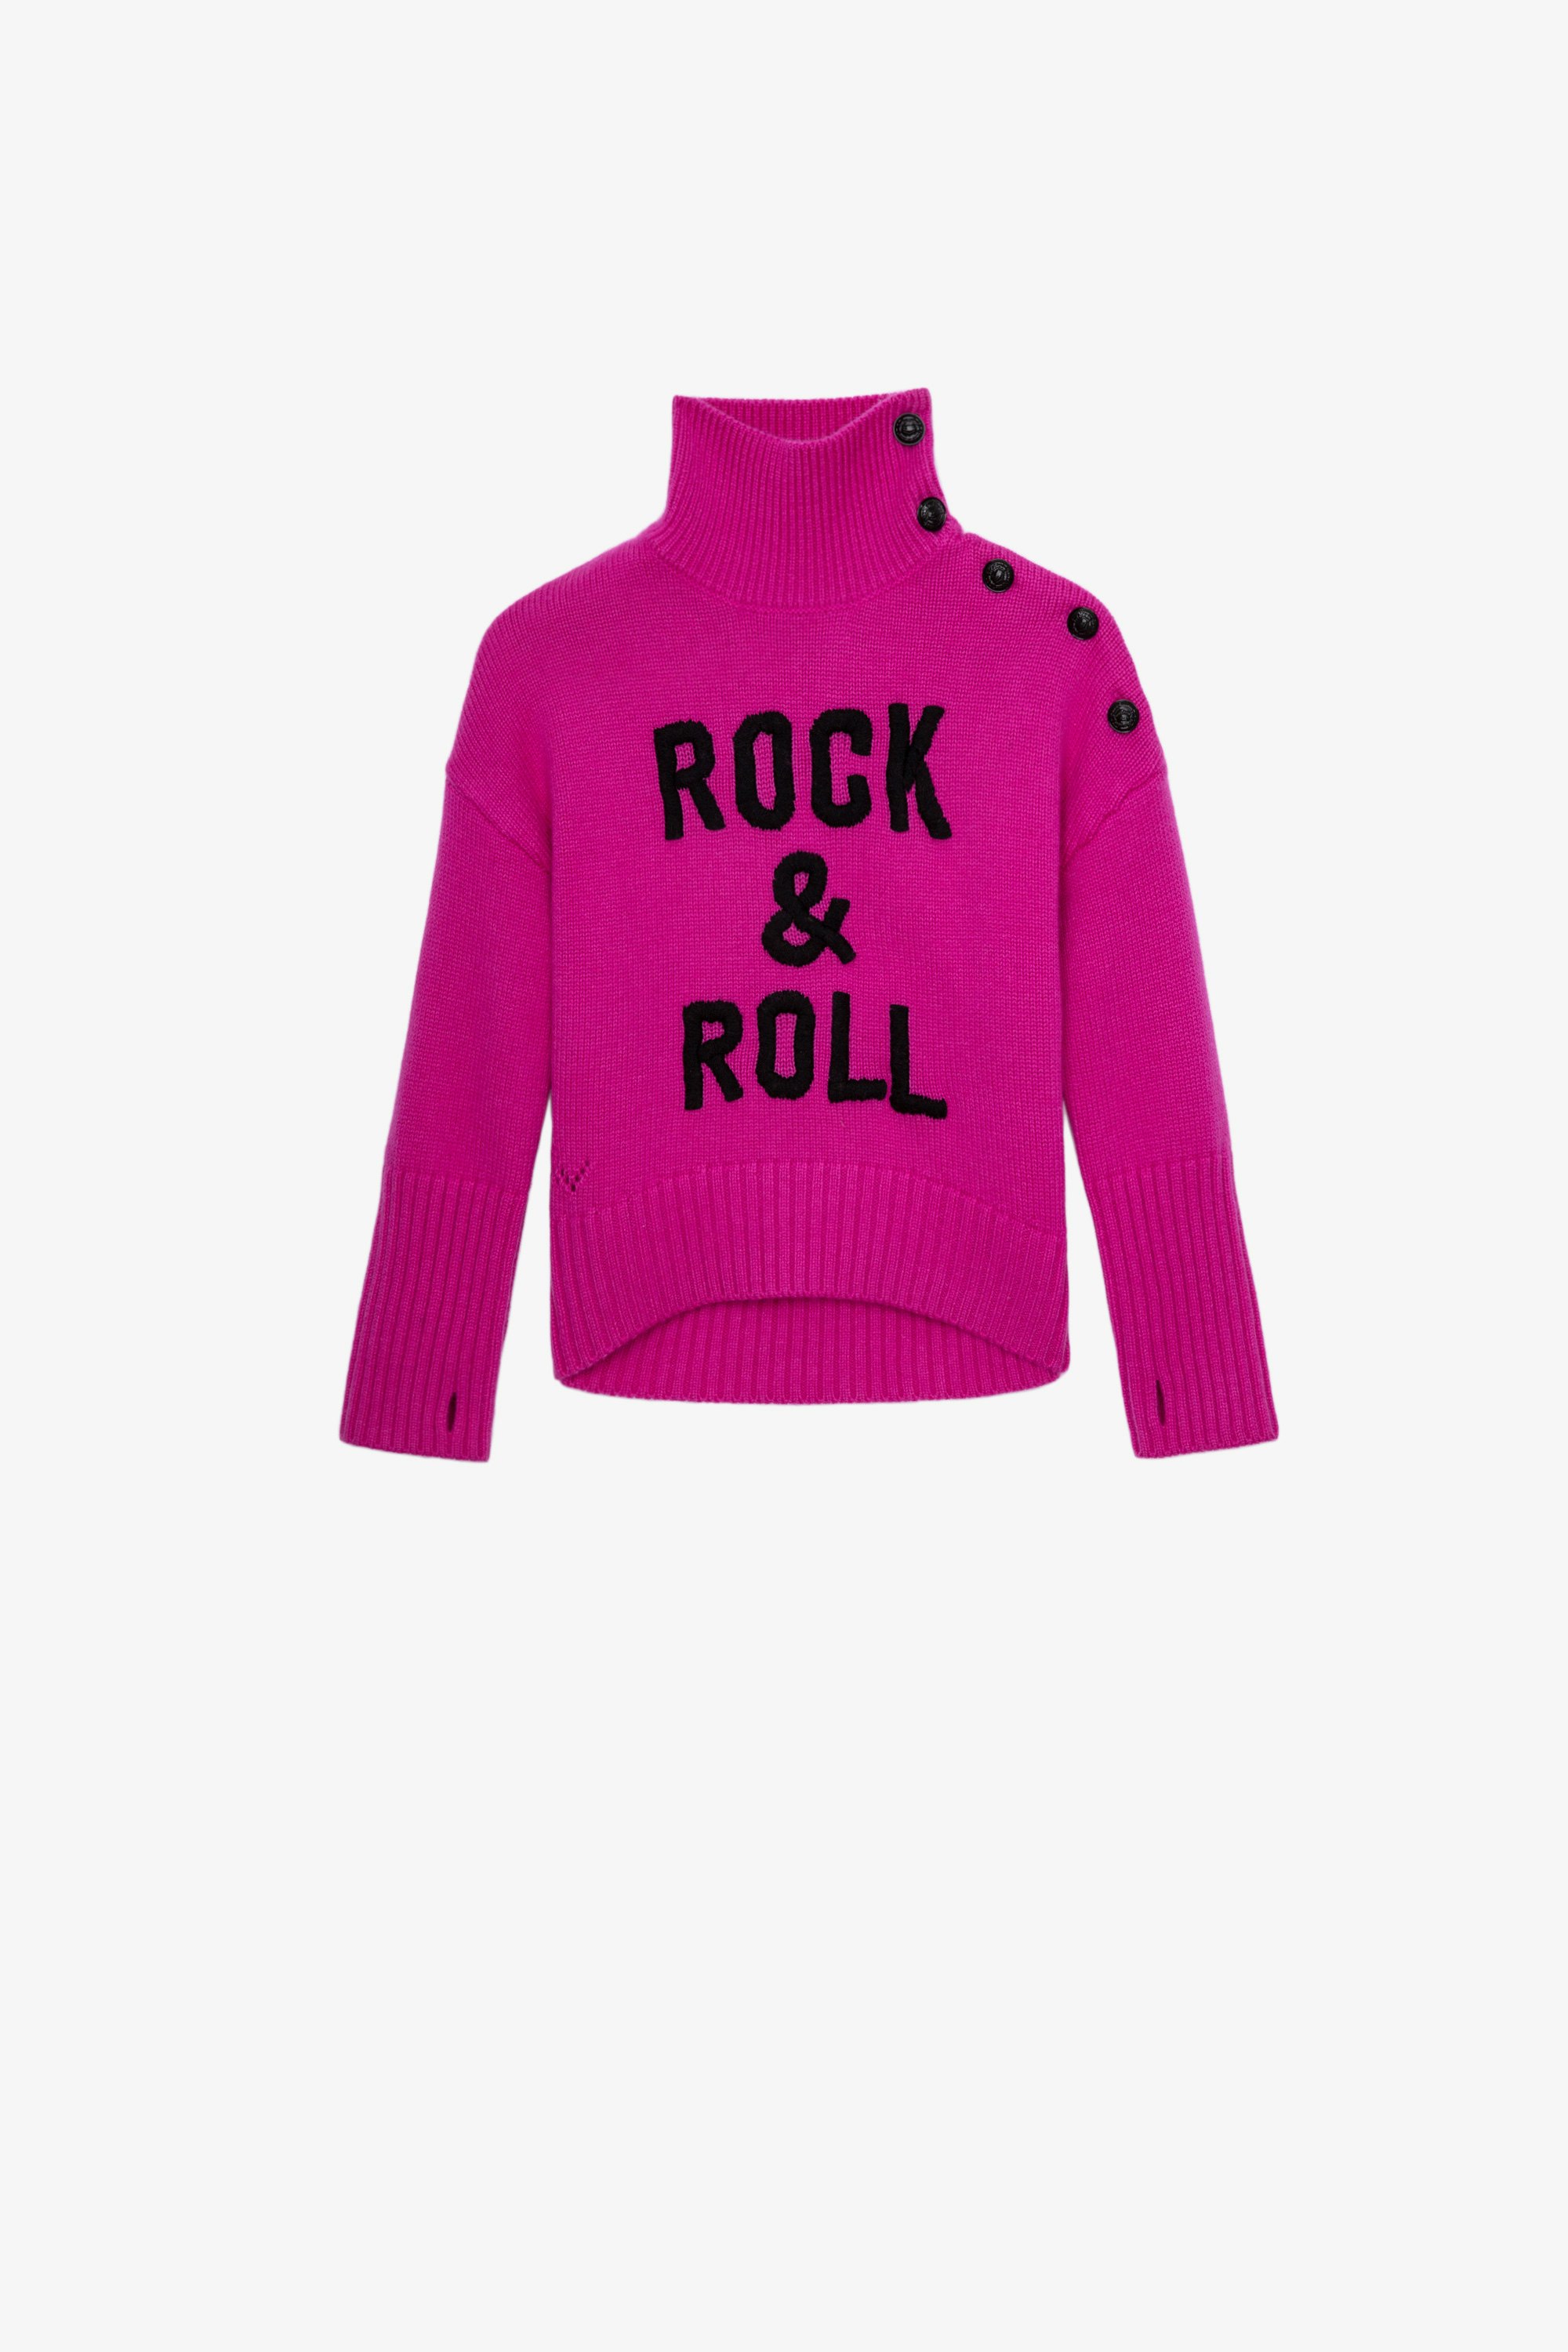 Alma Children’s Jumper Children’s pink long-sleeve turtleneck jumper with “Rock & Roll” message and buttons on shoulder 